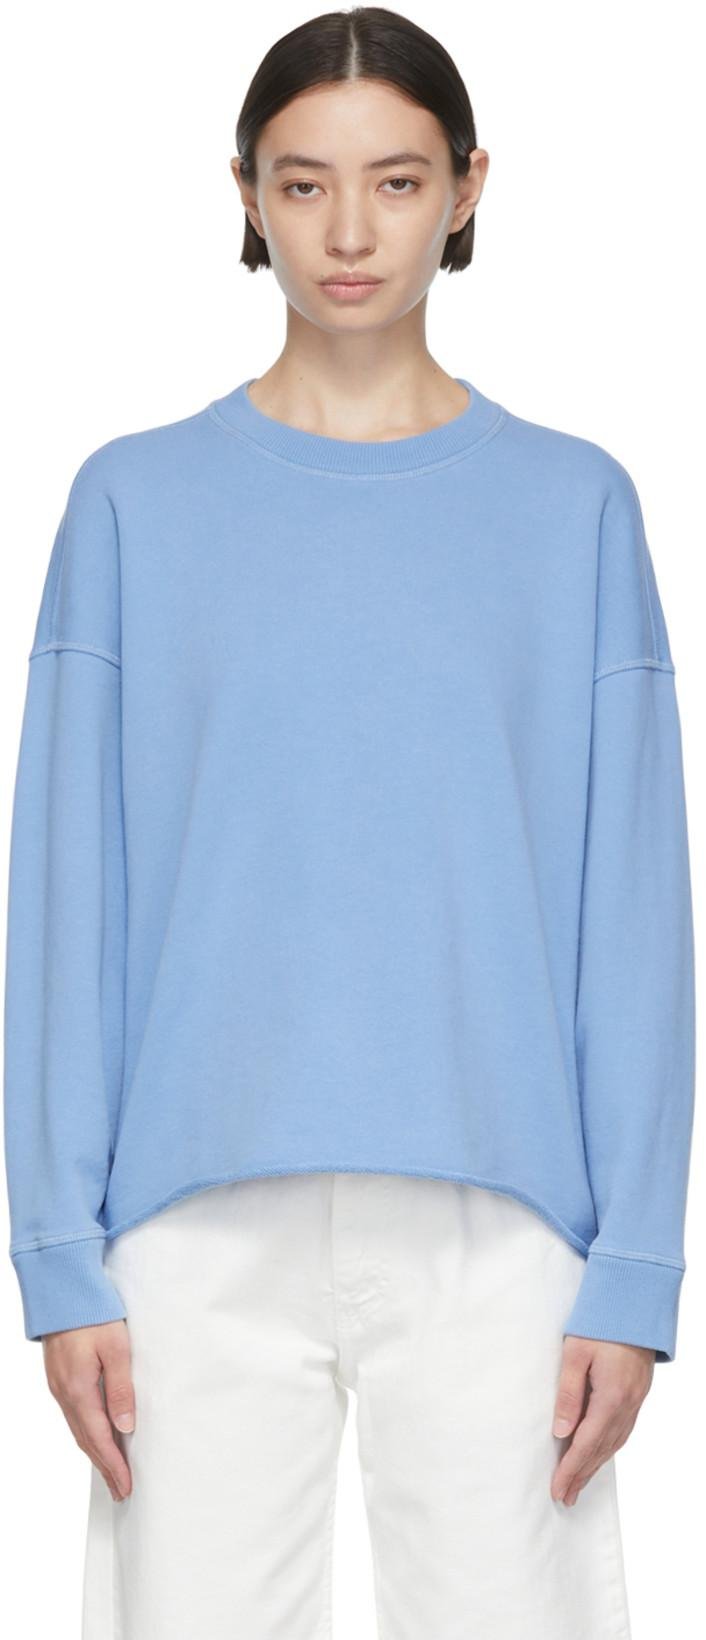 Blue Cotton Sweatshirt by 6397